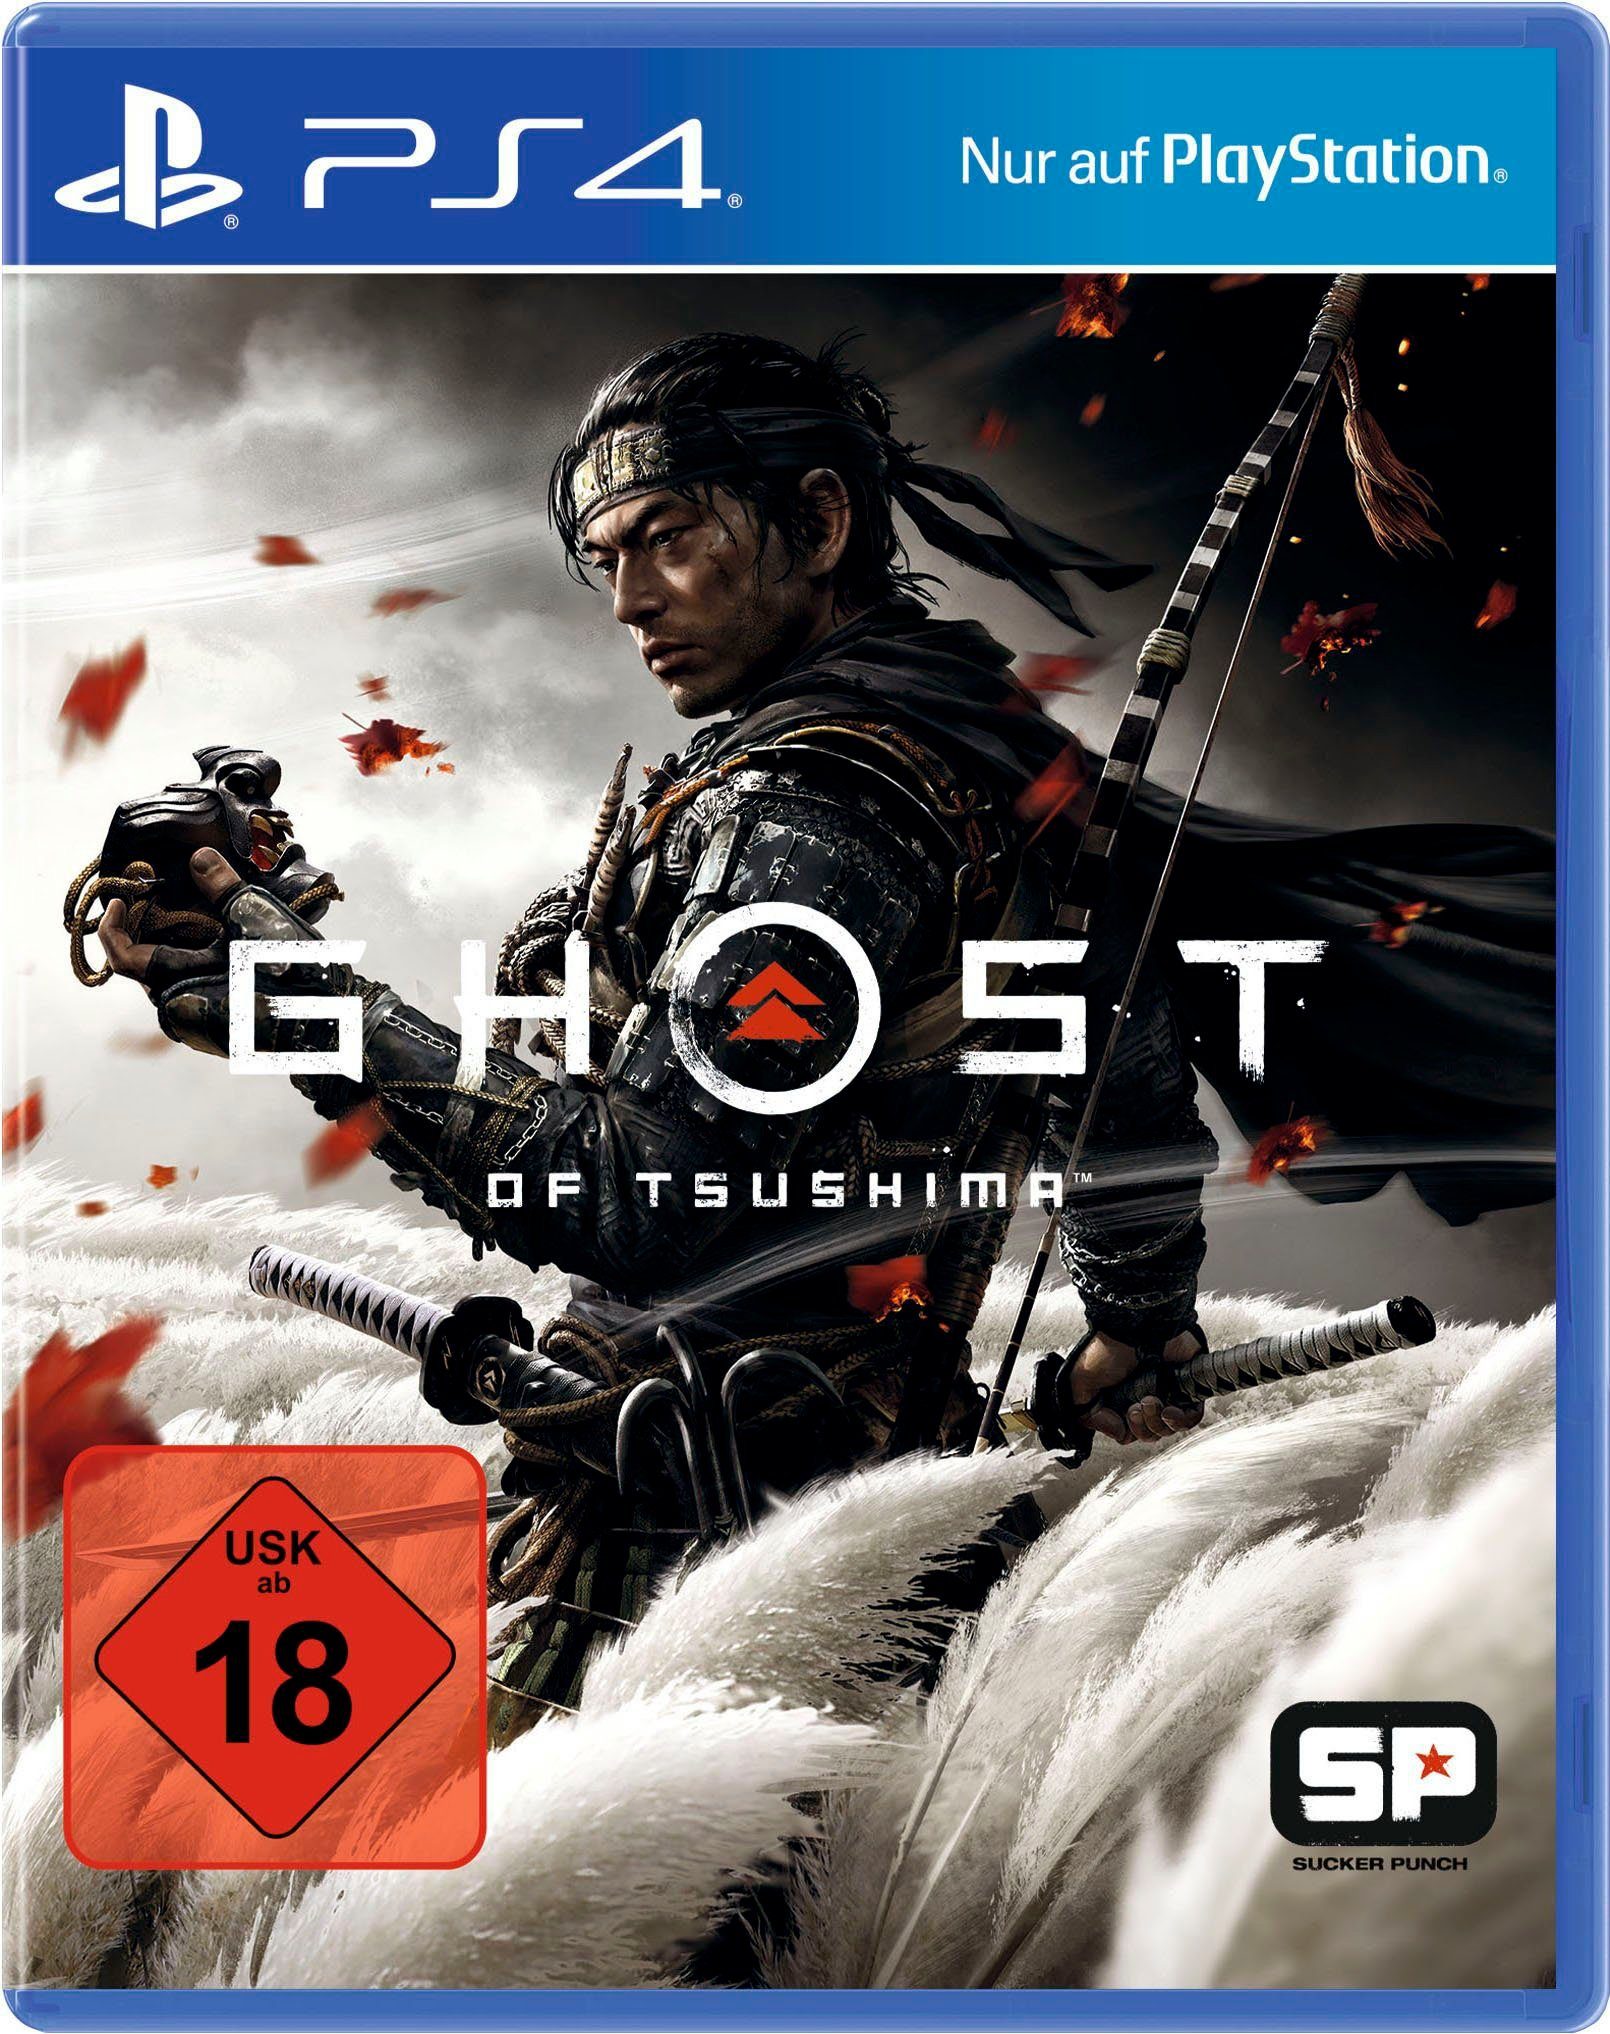 Ghost 4 Slim, Tsushima 500GB, inkl. of PlayStation